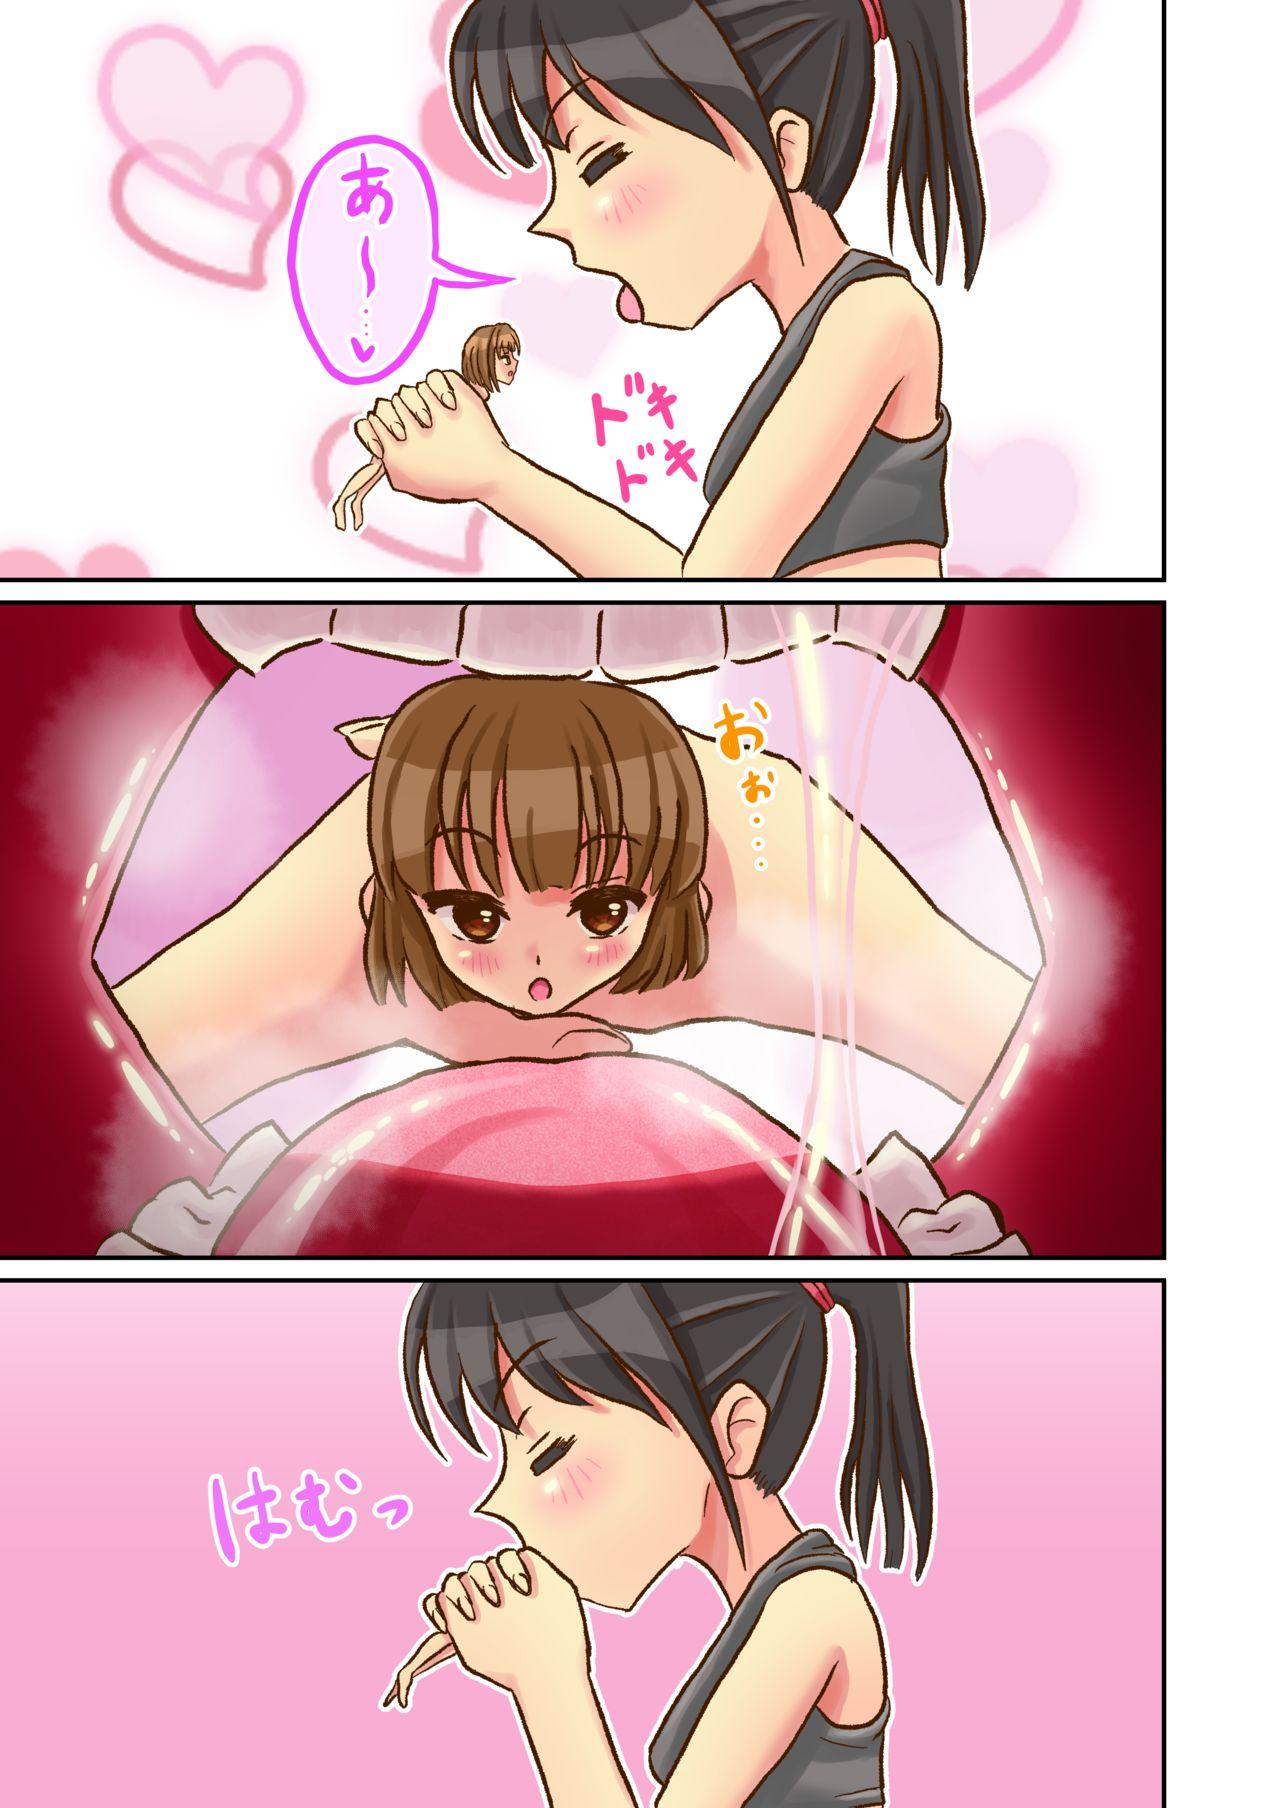 Blackmail Marunomi Feti no Tsundere Musume ga Nettori to Marunomi shite kureru Manga - Original Gay Longhair - Page 4